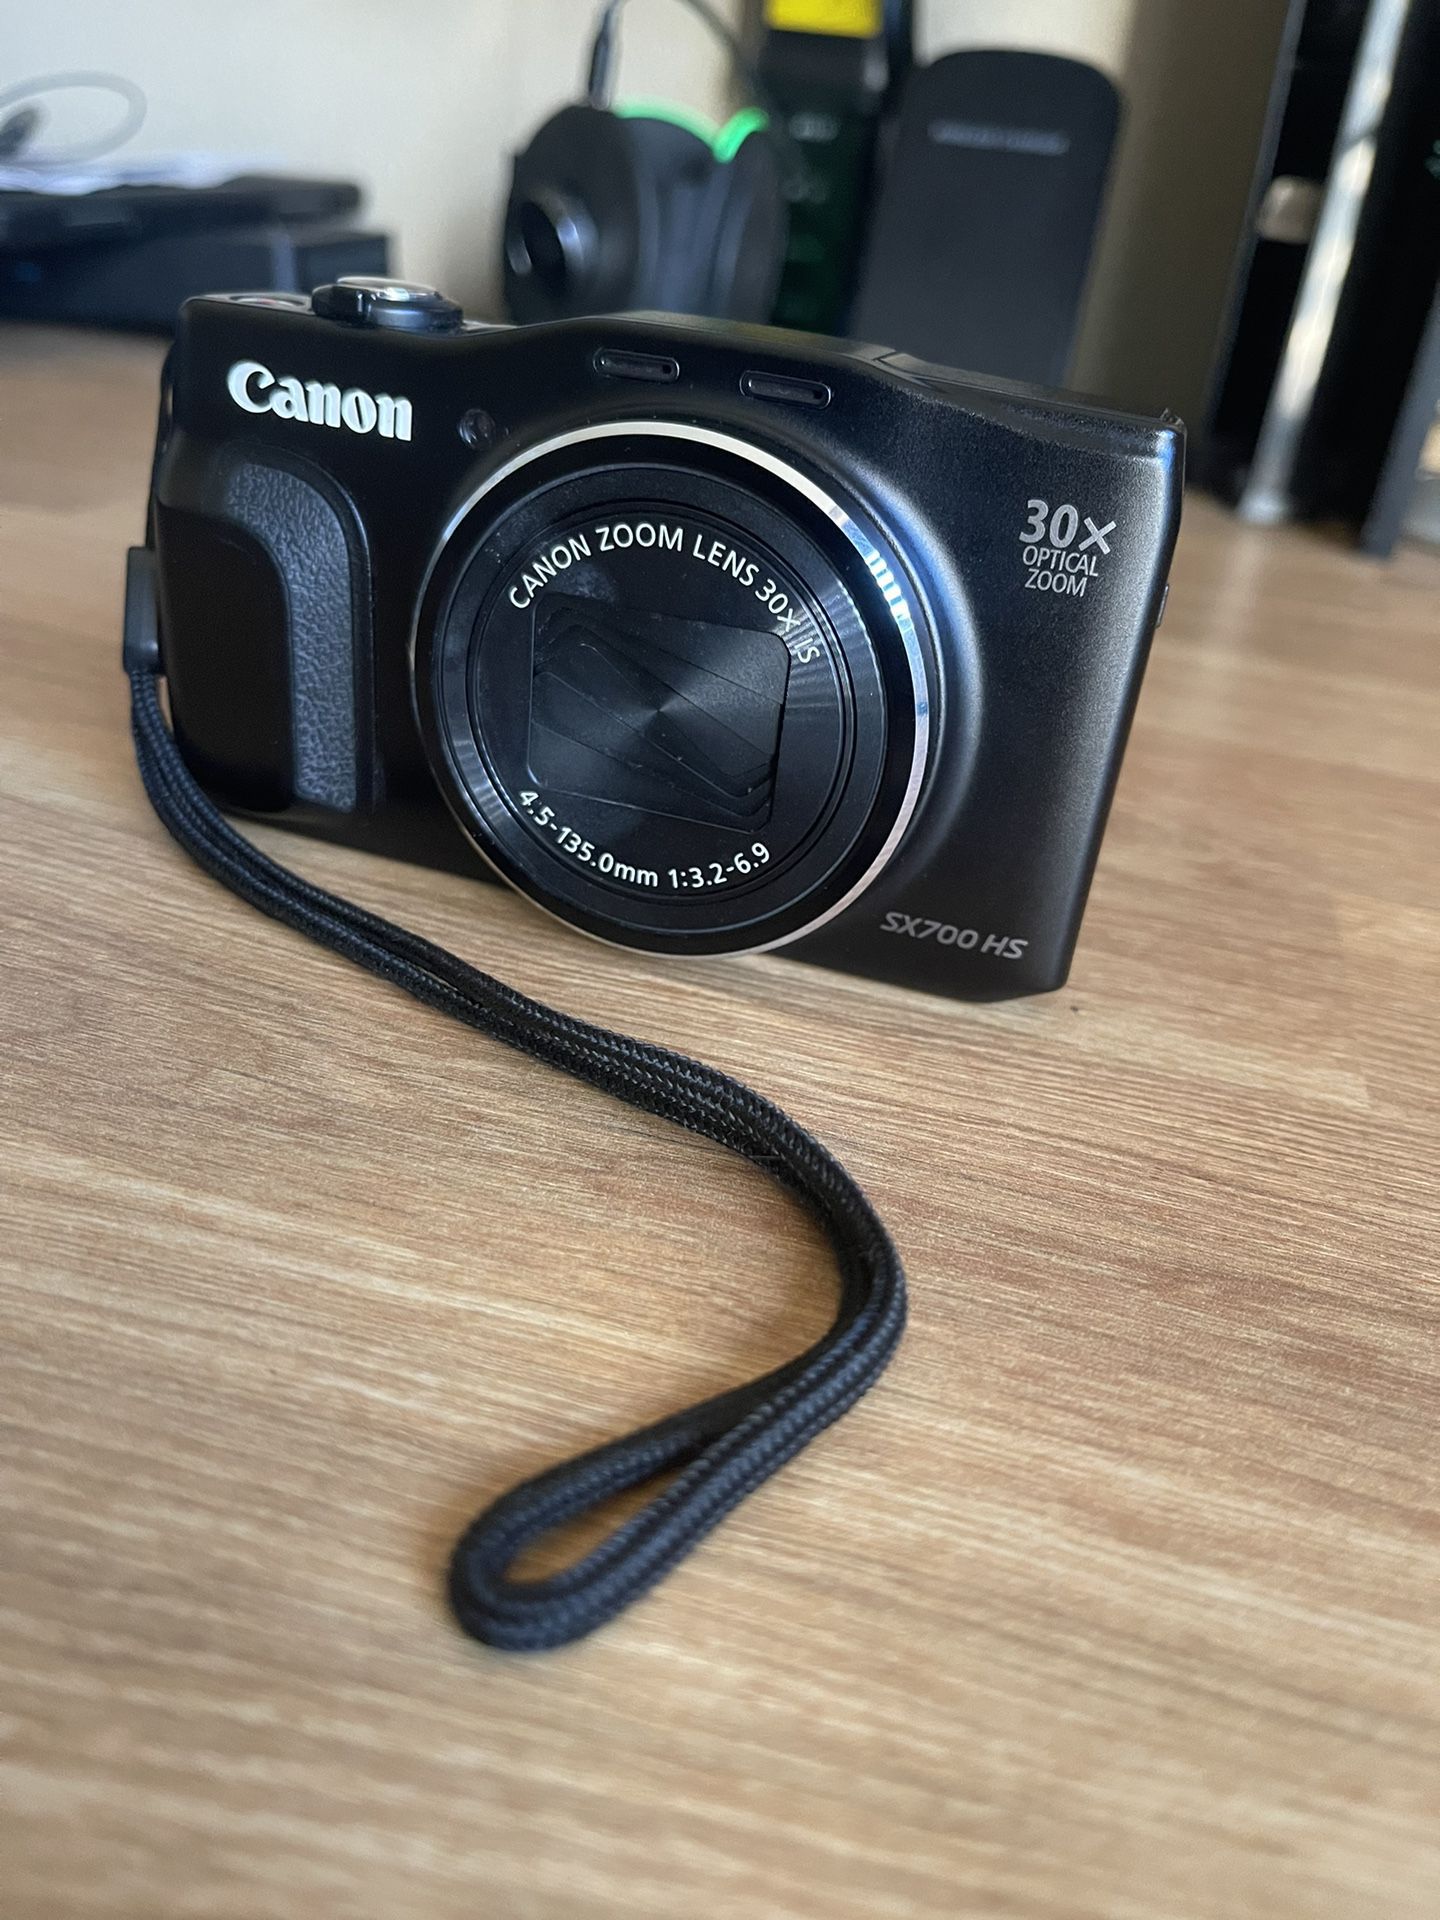 Canon PowerShot SX700 HS Digital Camera Wi-Fi  30x Zoom